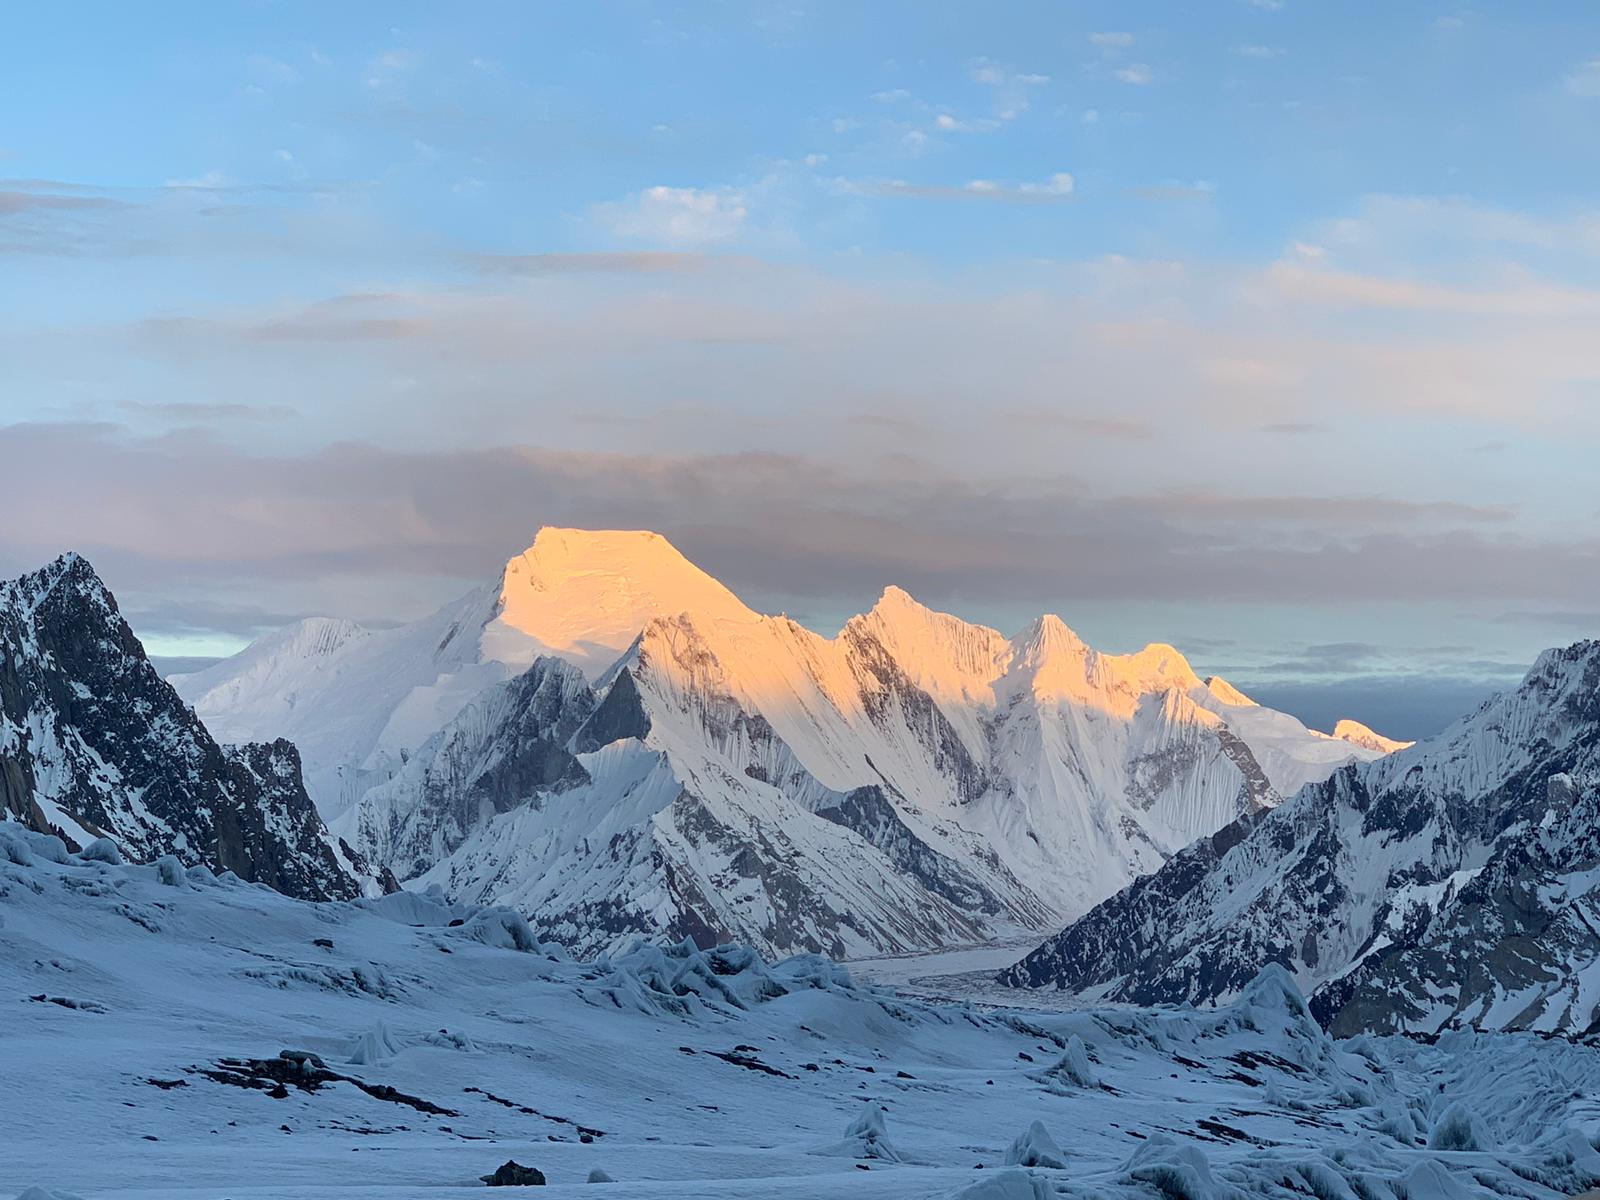 Chogolisa as seen from K2 base camp